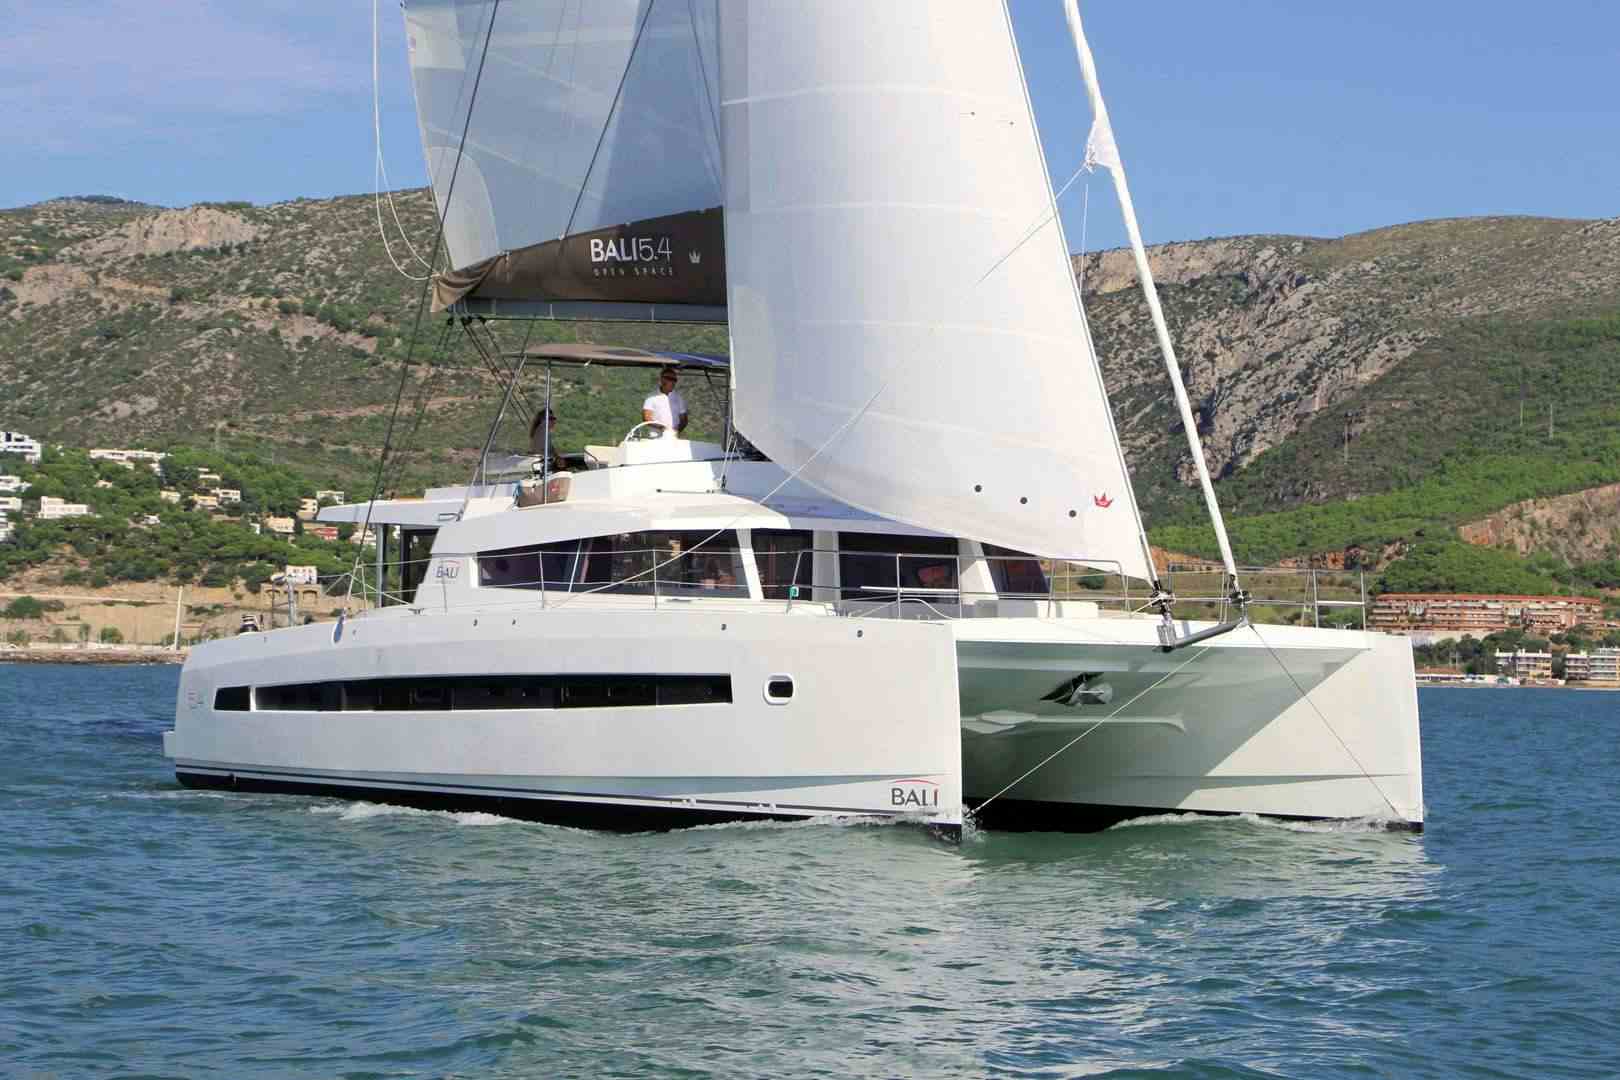 TWO OCEANS - Yacht Charter Ibiza & Boat hire in W. Med - Spain/Balearics, Caribbean Leewards, Caribbean Windwards, Caribbean Virgin Islands (BVI) 1